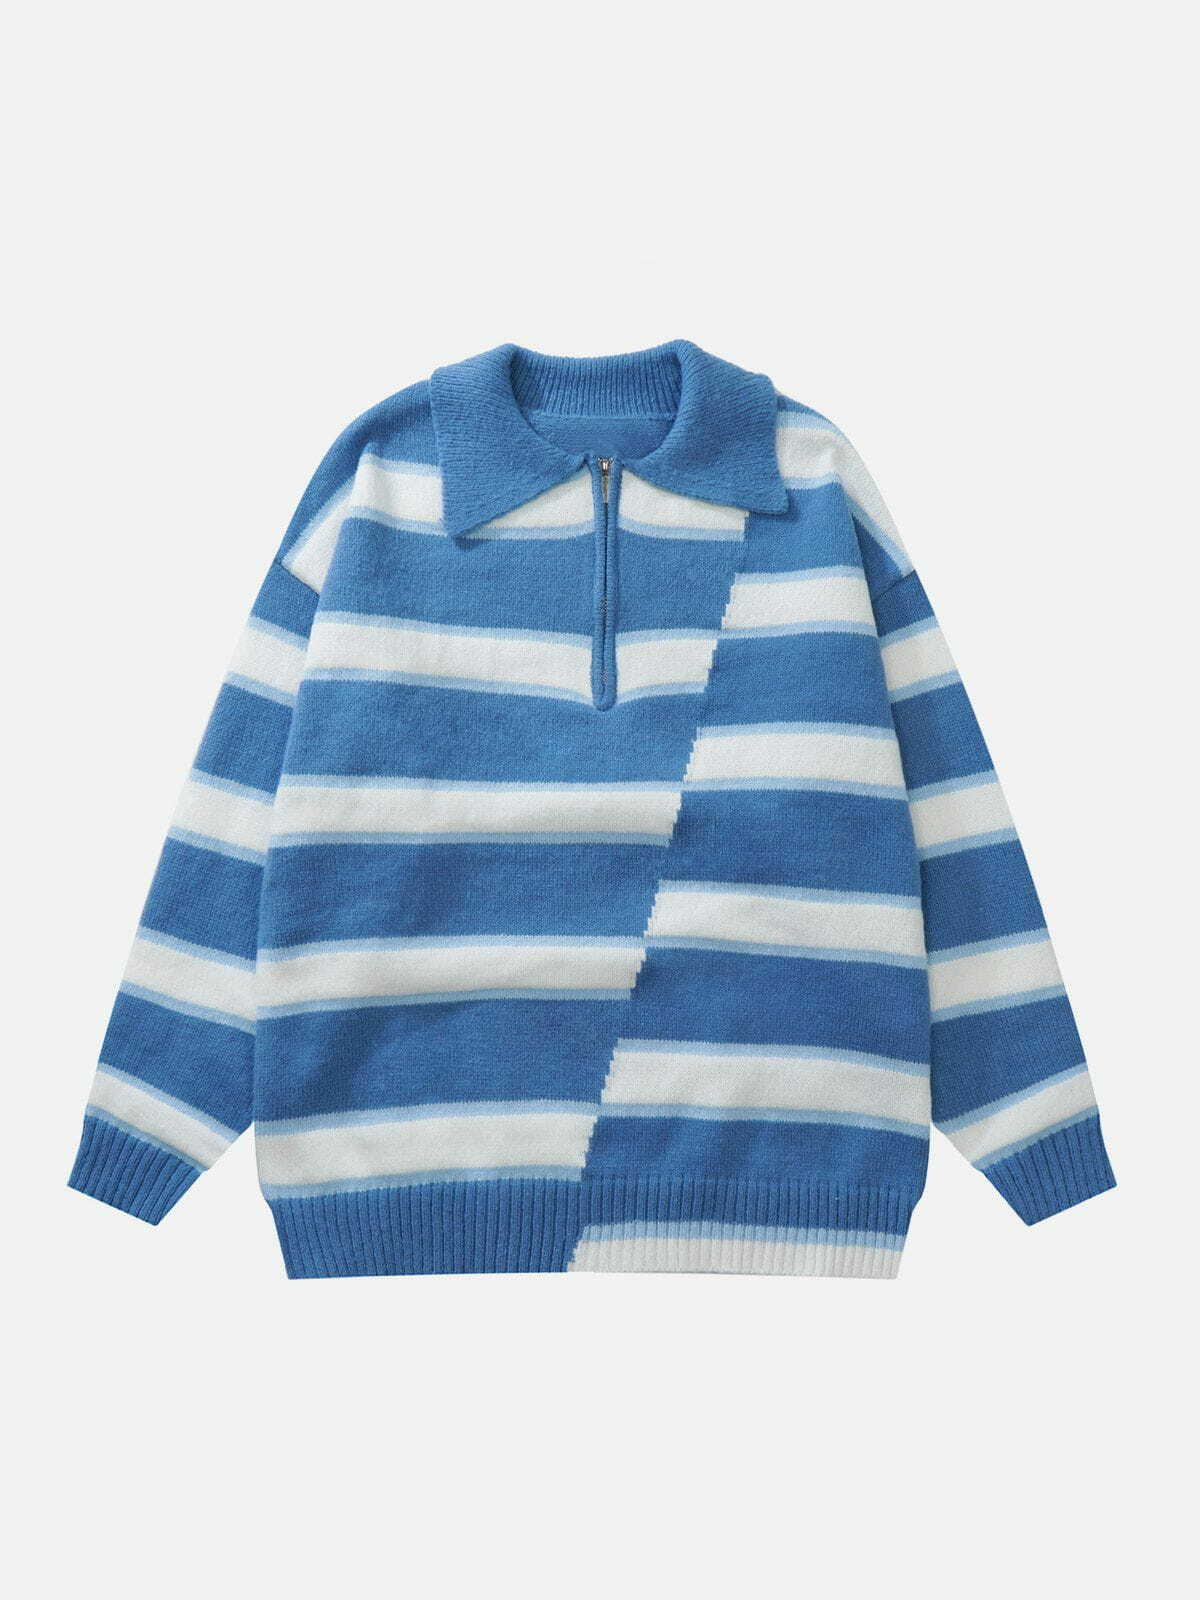 striped polo sweater edgy & retro streetwear 4696